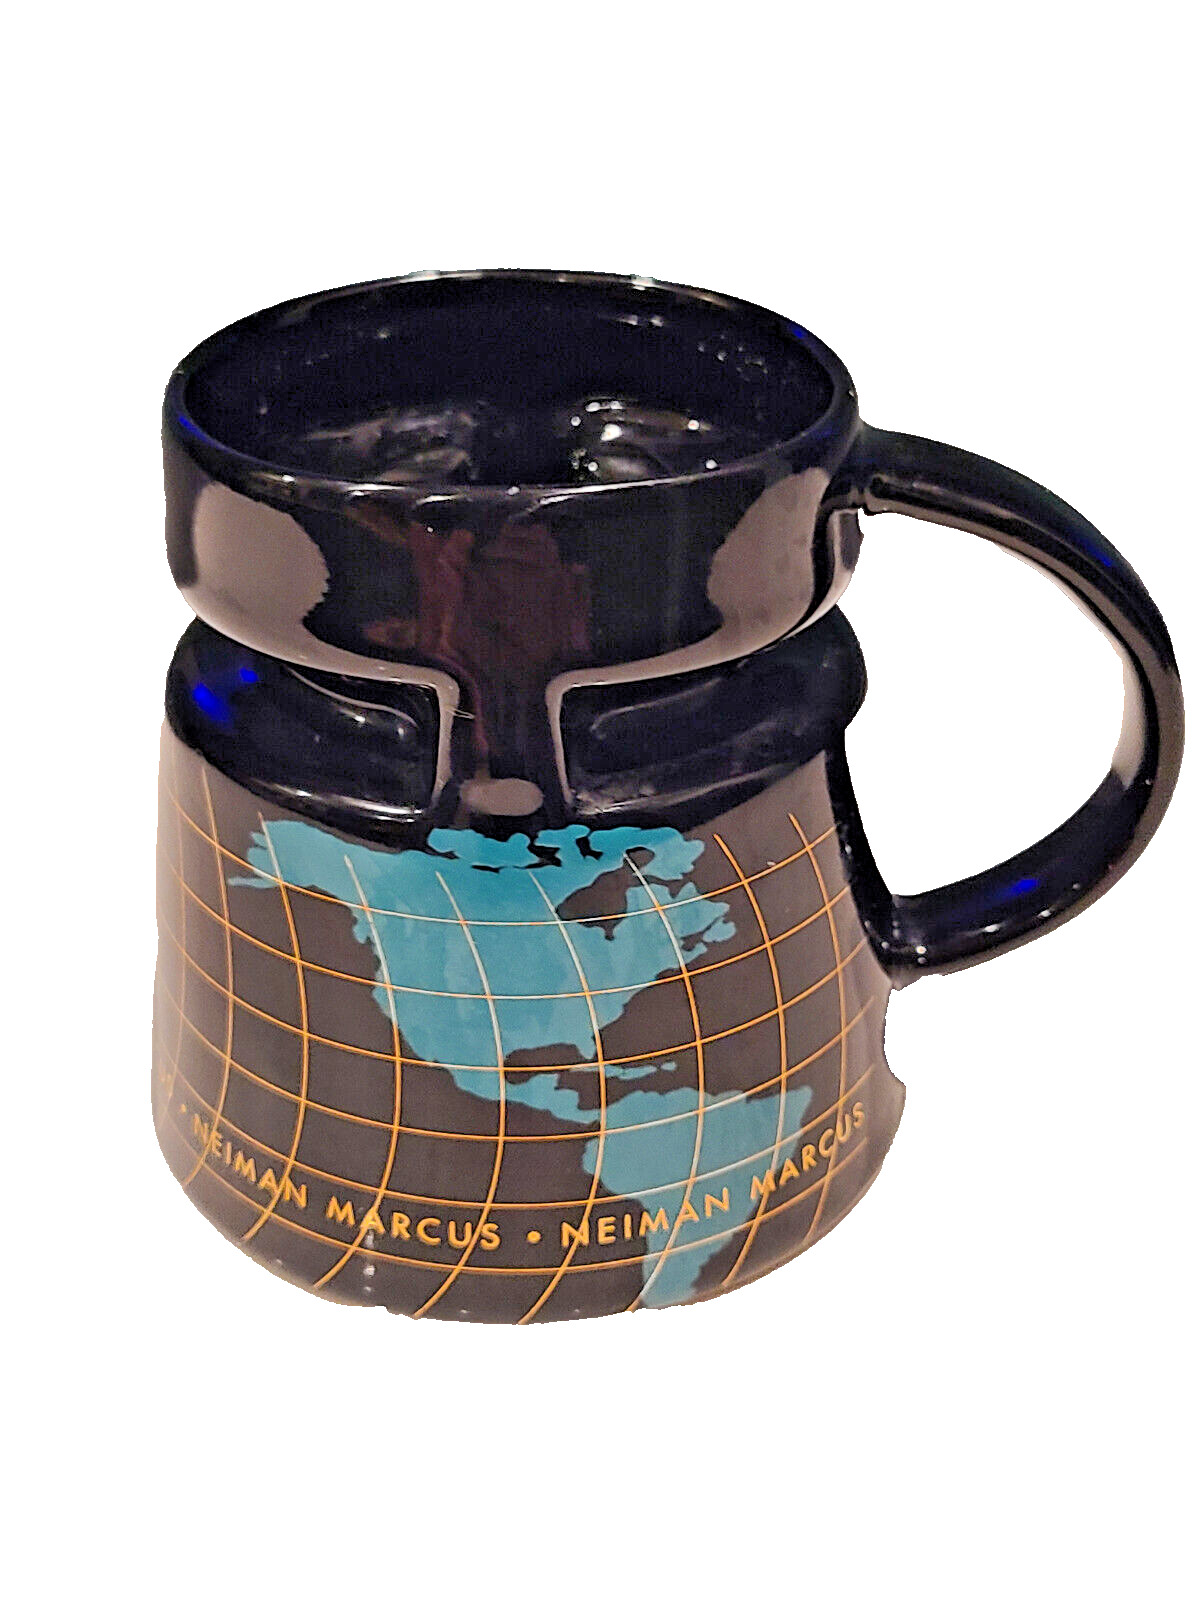 Neiman Marcus GOJO Travel Mug No Slip Bottom World Map Globe